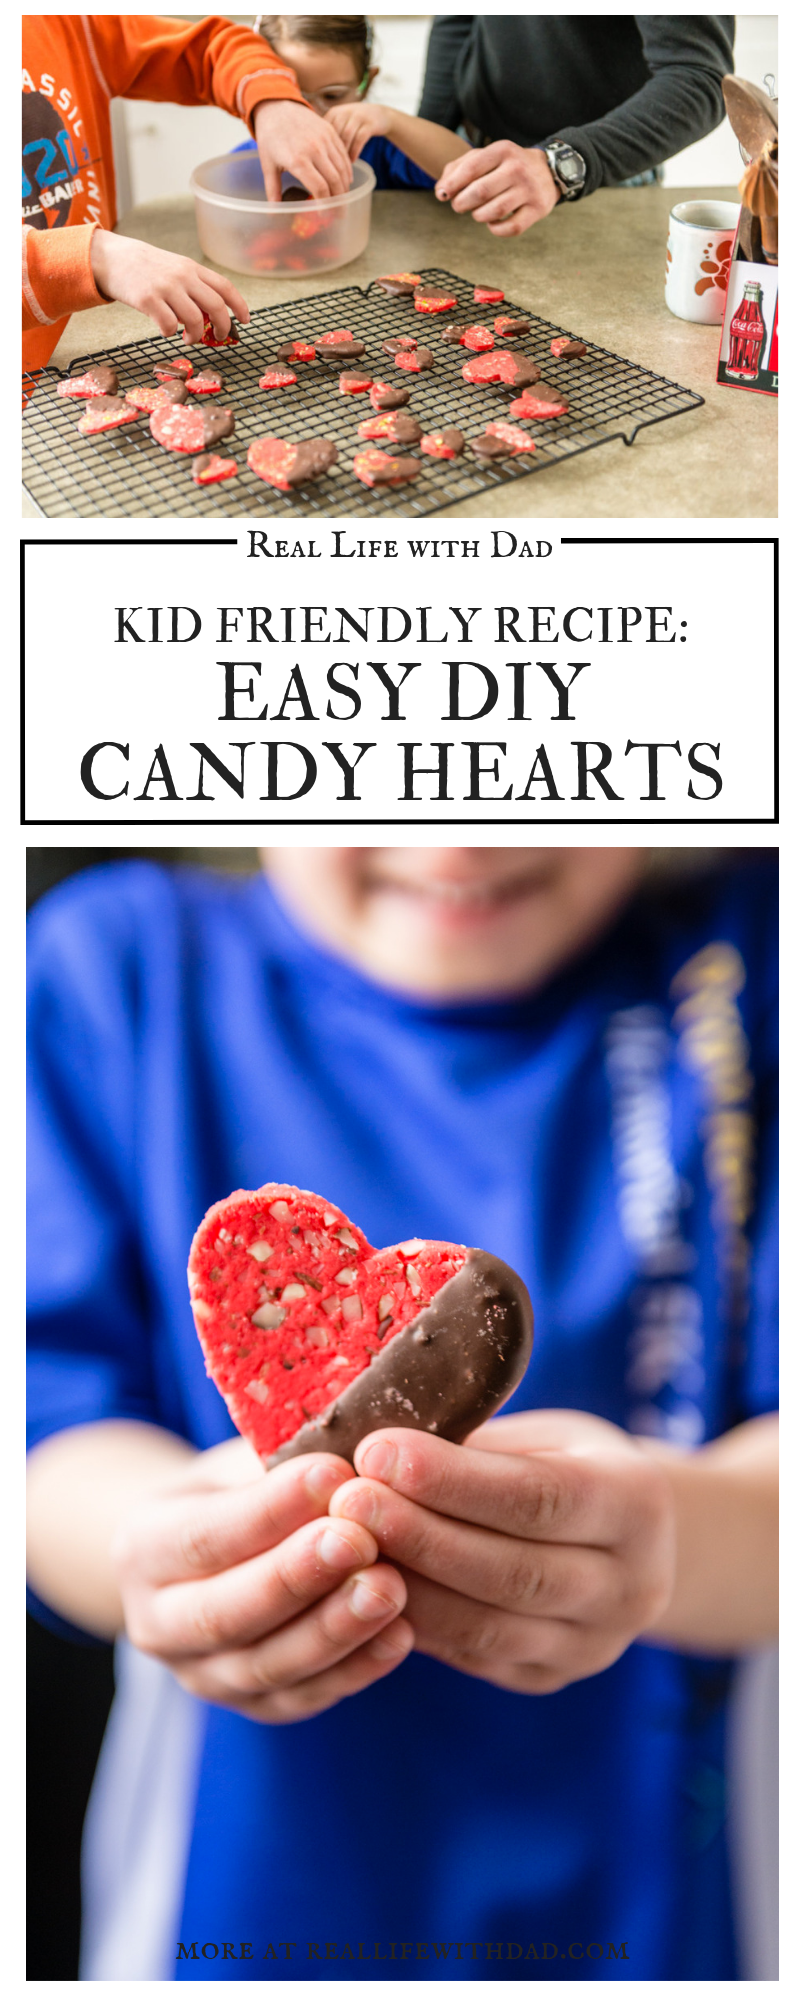 DIY Candy Hearts | RealLifeWithDad.com